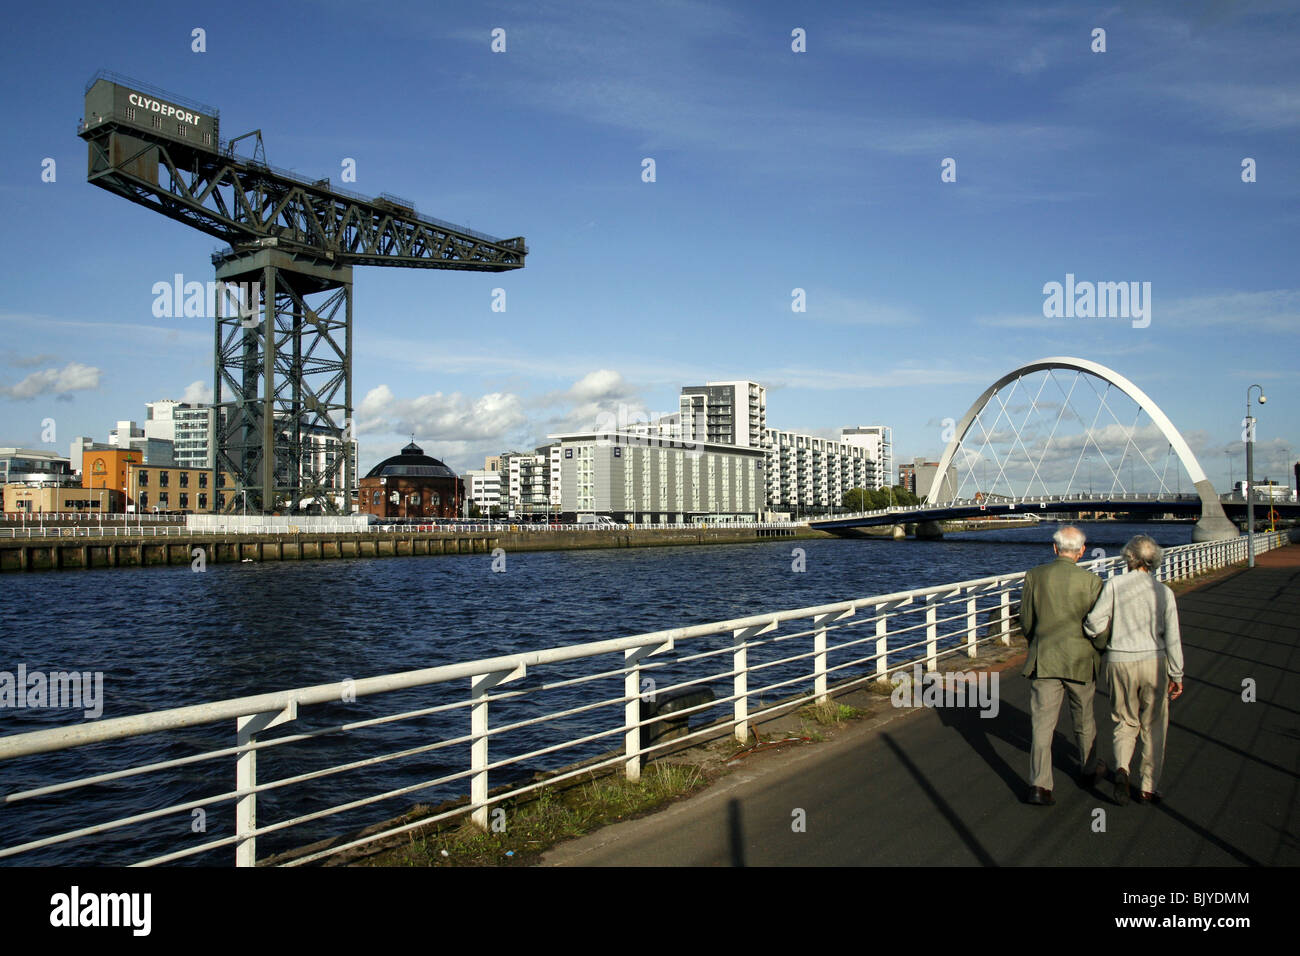 Stobcross Crane / Finnieston Crane / Clydeport Crane, Clyde Arc Bridge, Pacific Quay, River Clyde, Glasgow, Scotland Stock Photo